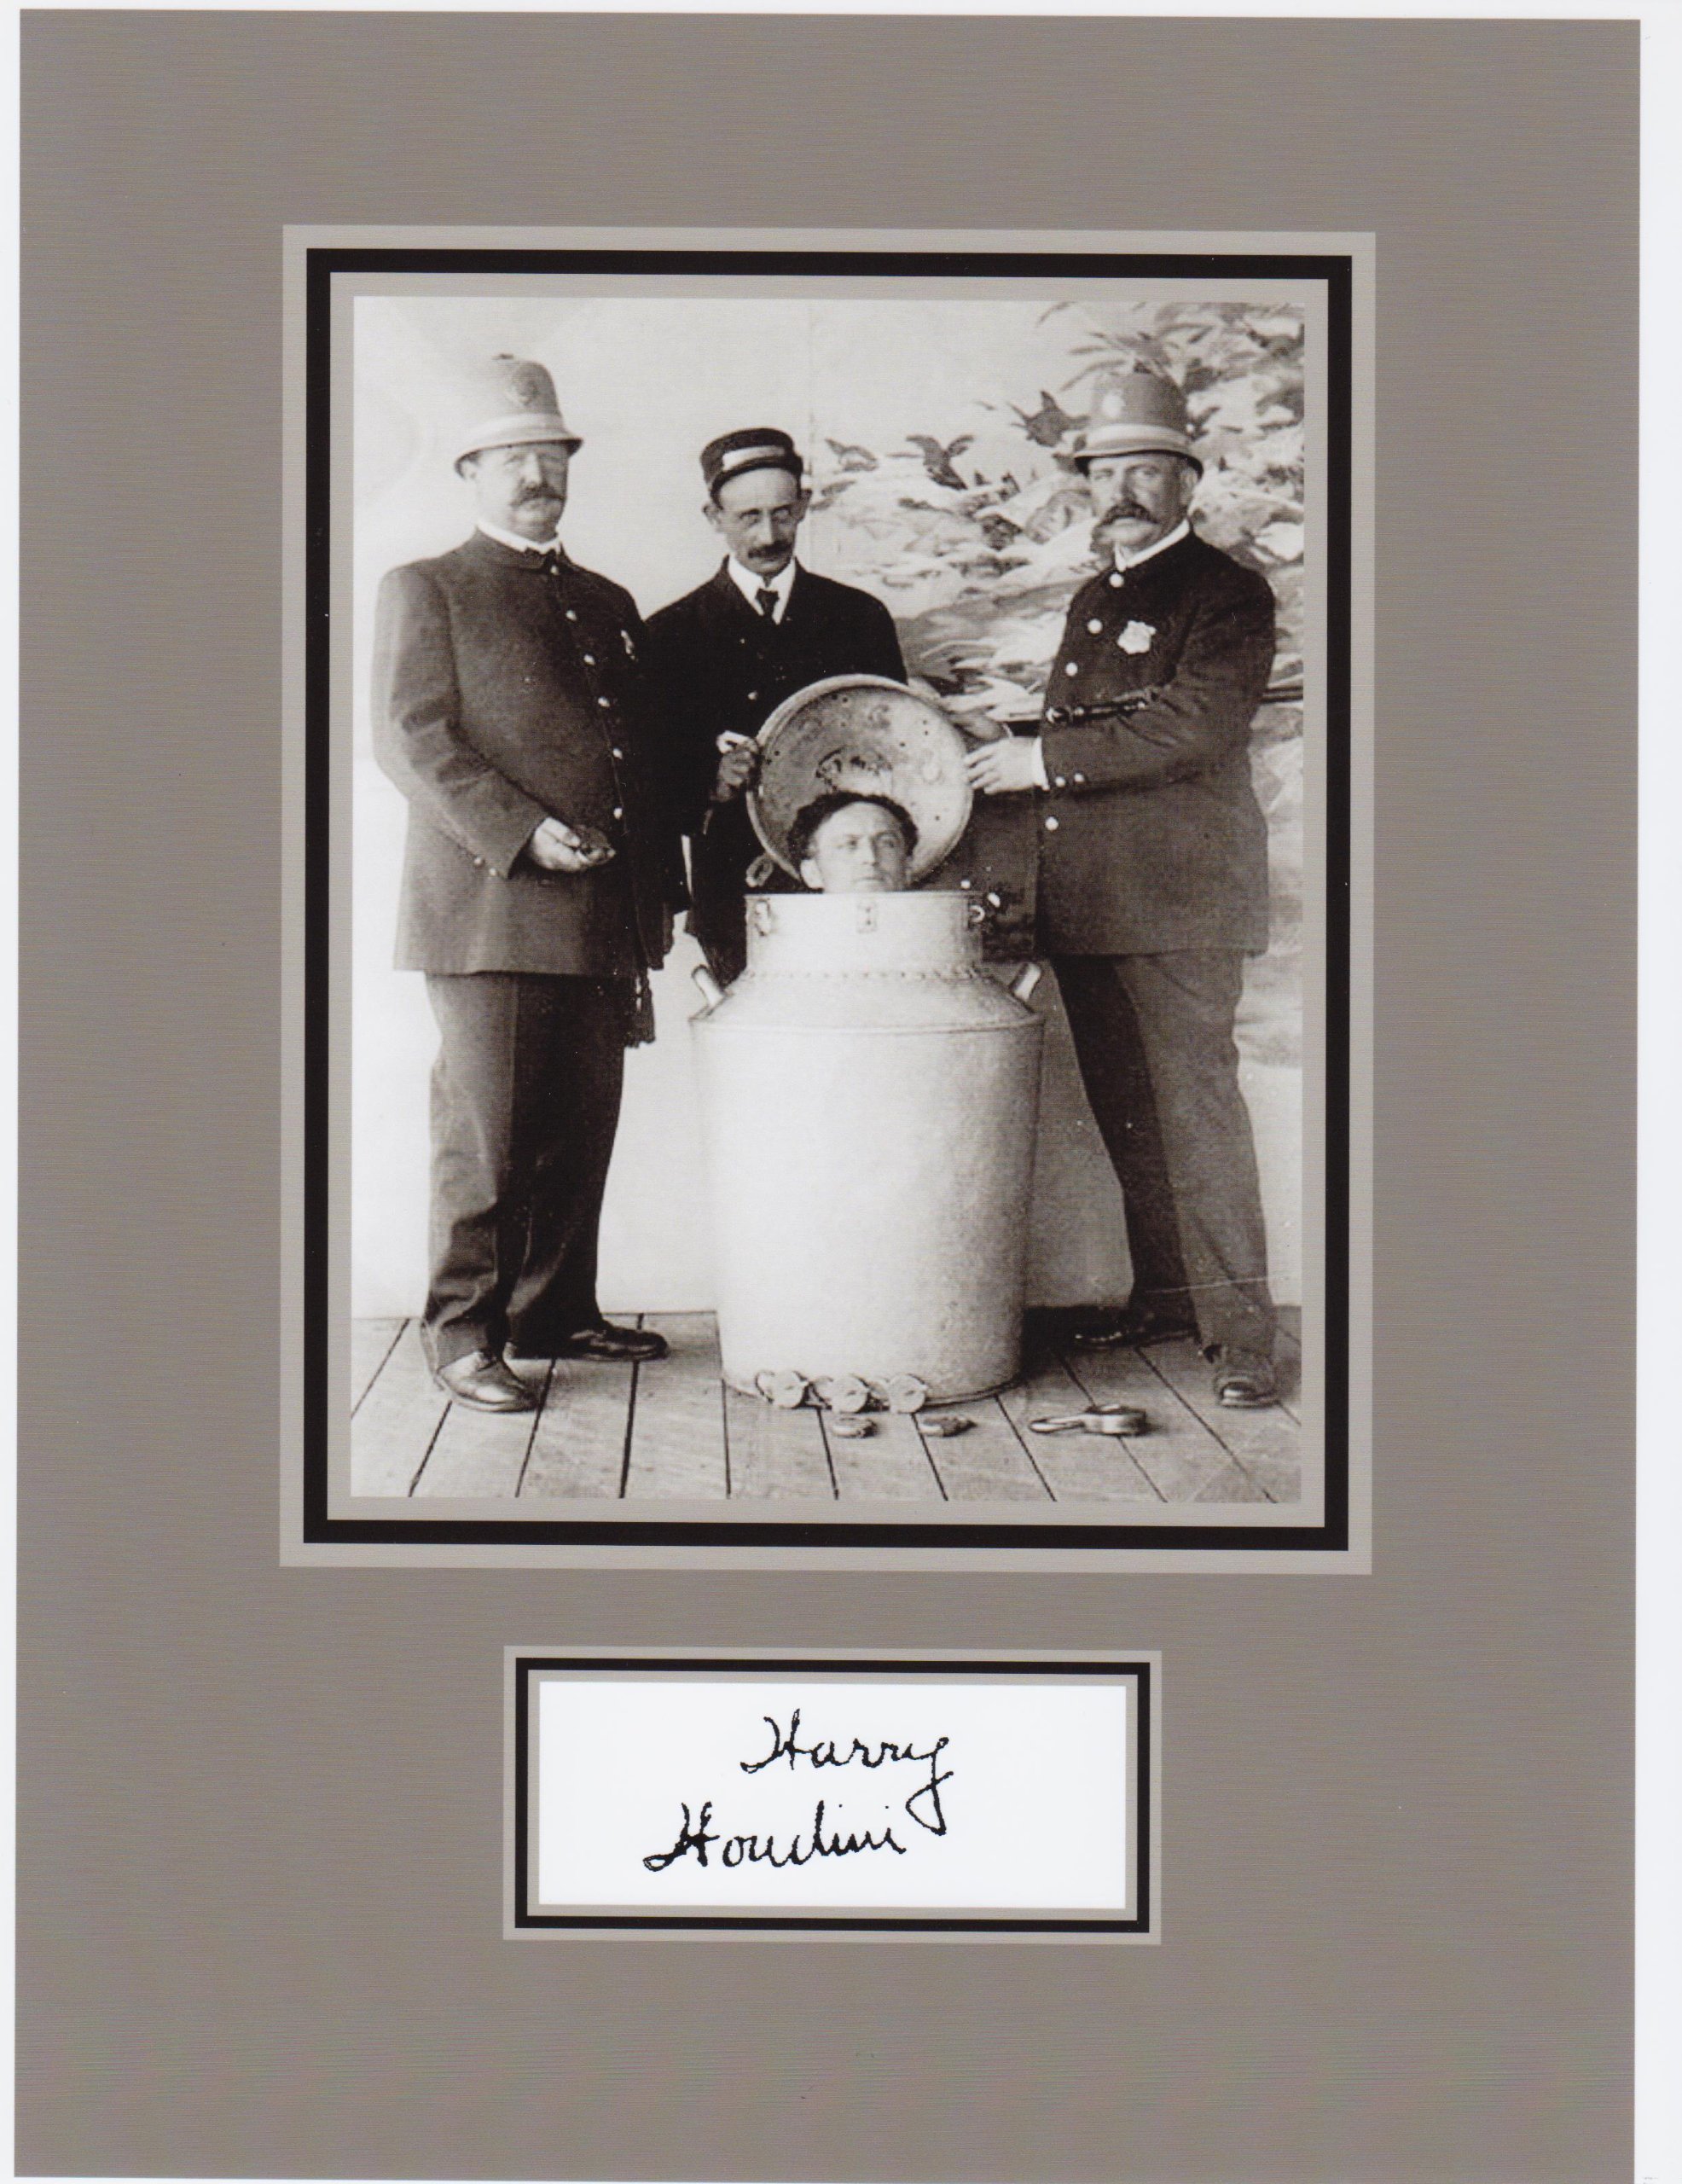 Kirkland Harry Houdini 8 X 10 Autograph Photo on Glossy Photo Paper